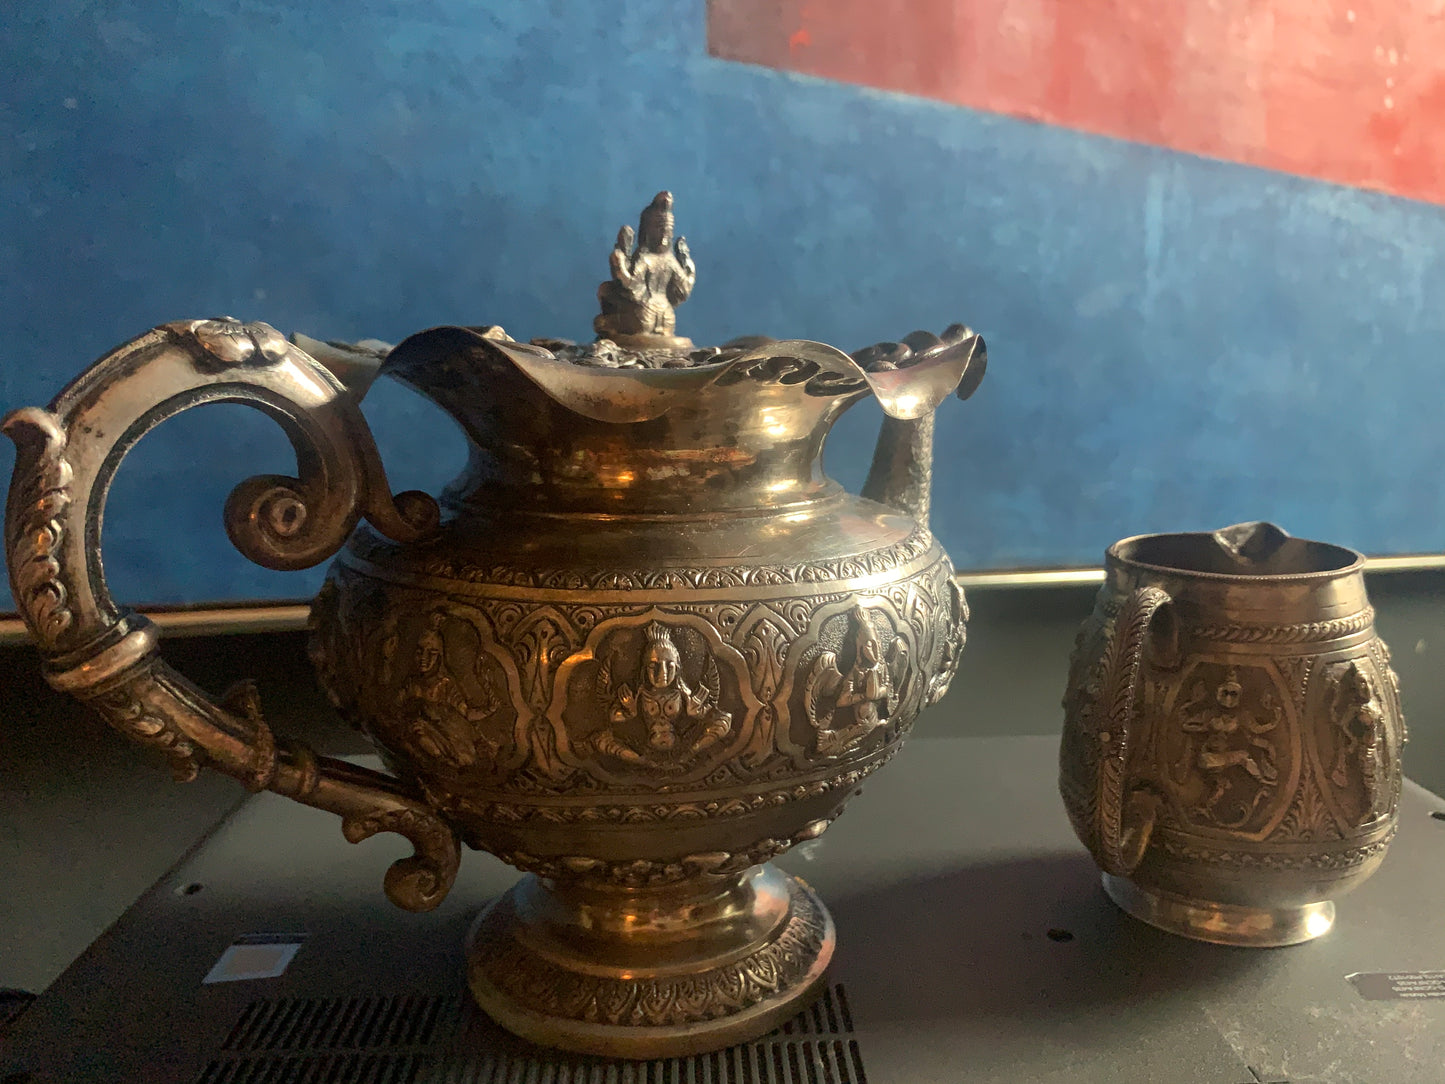 A silver tea set